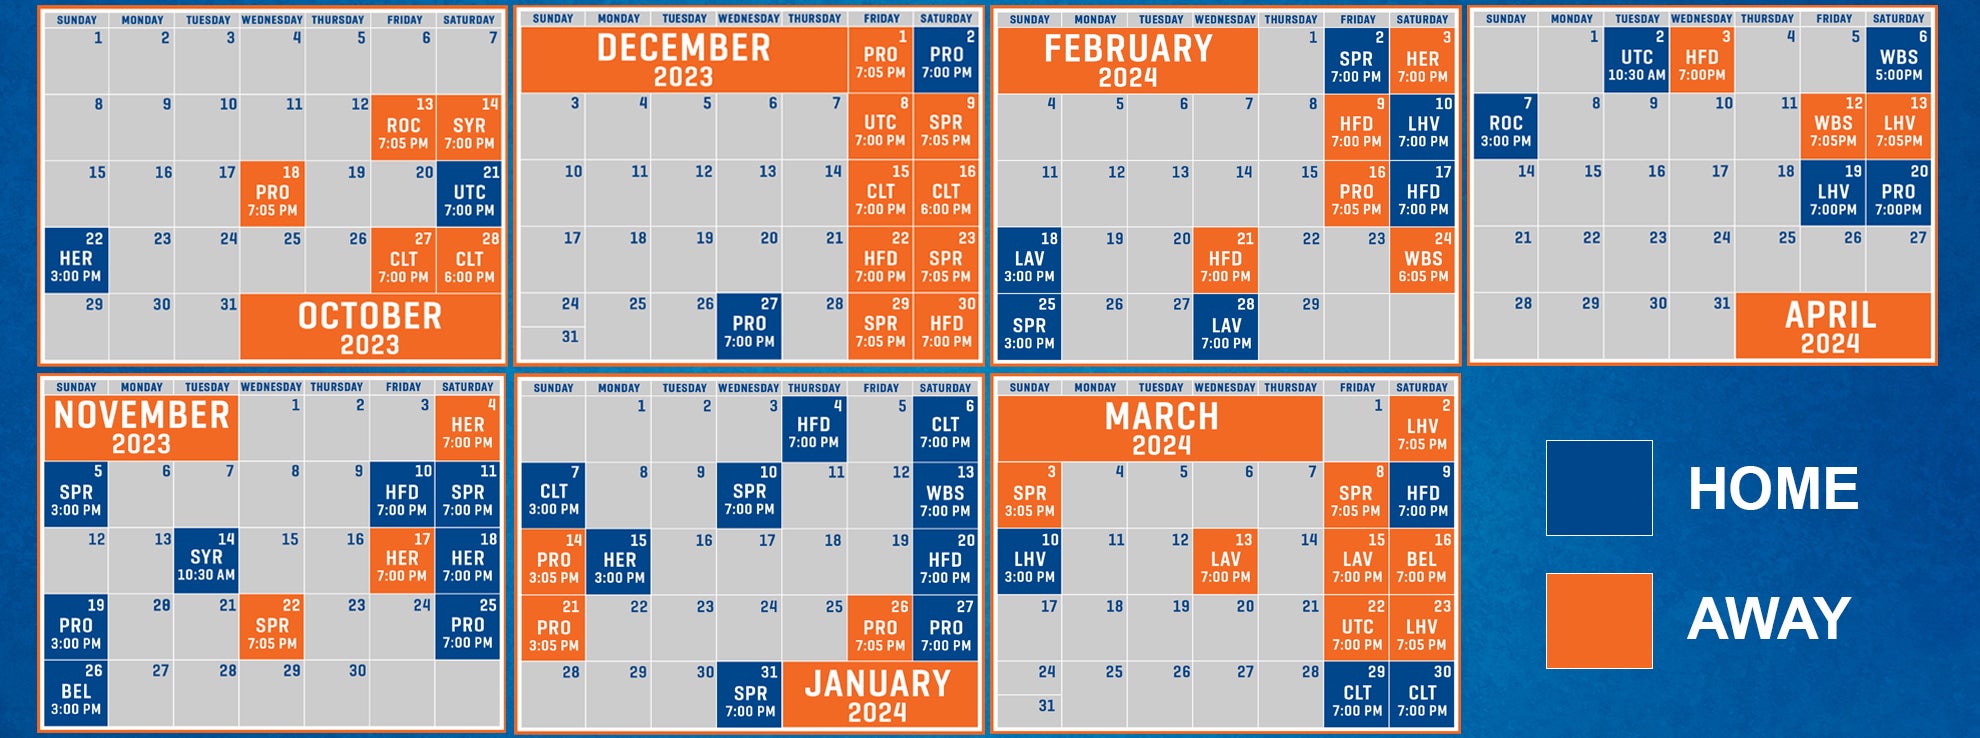 Syracuse Crunch Announce 2023-24 Regular Season Schedule